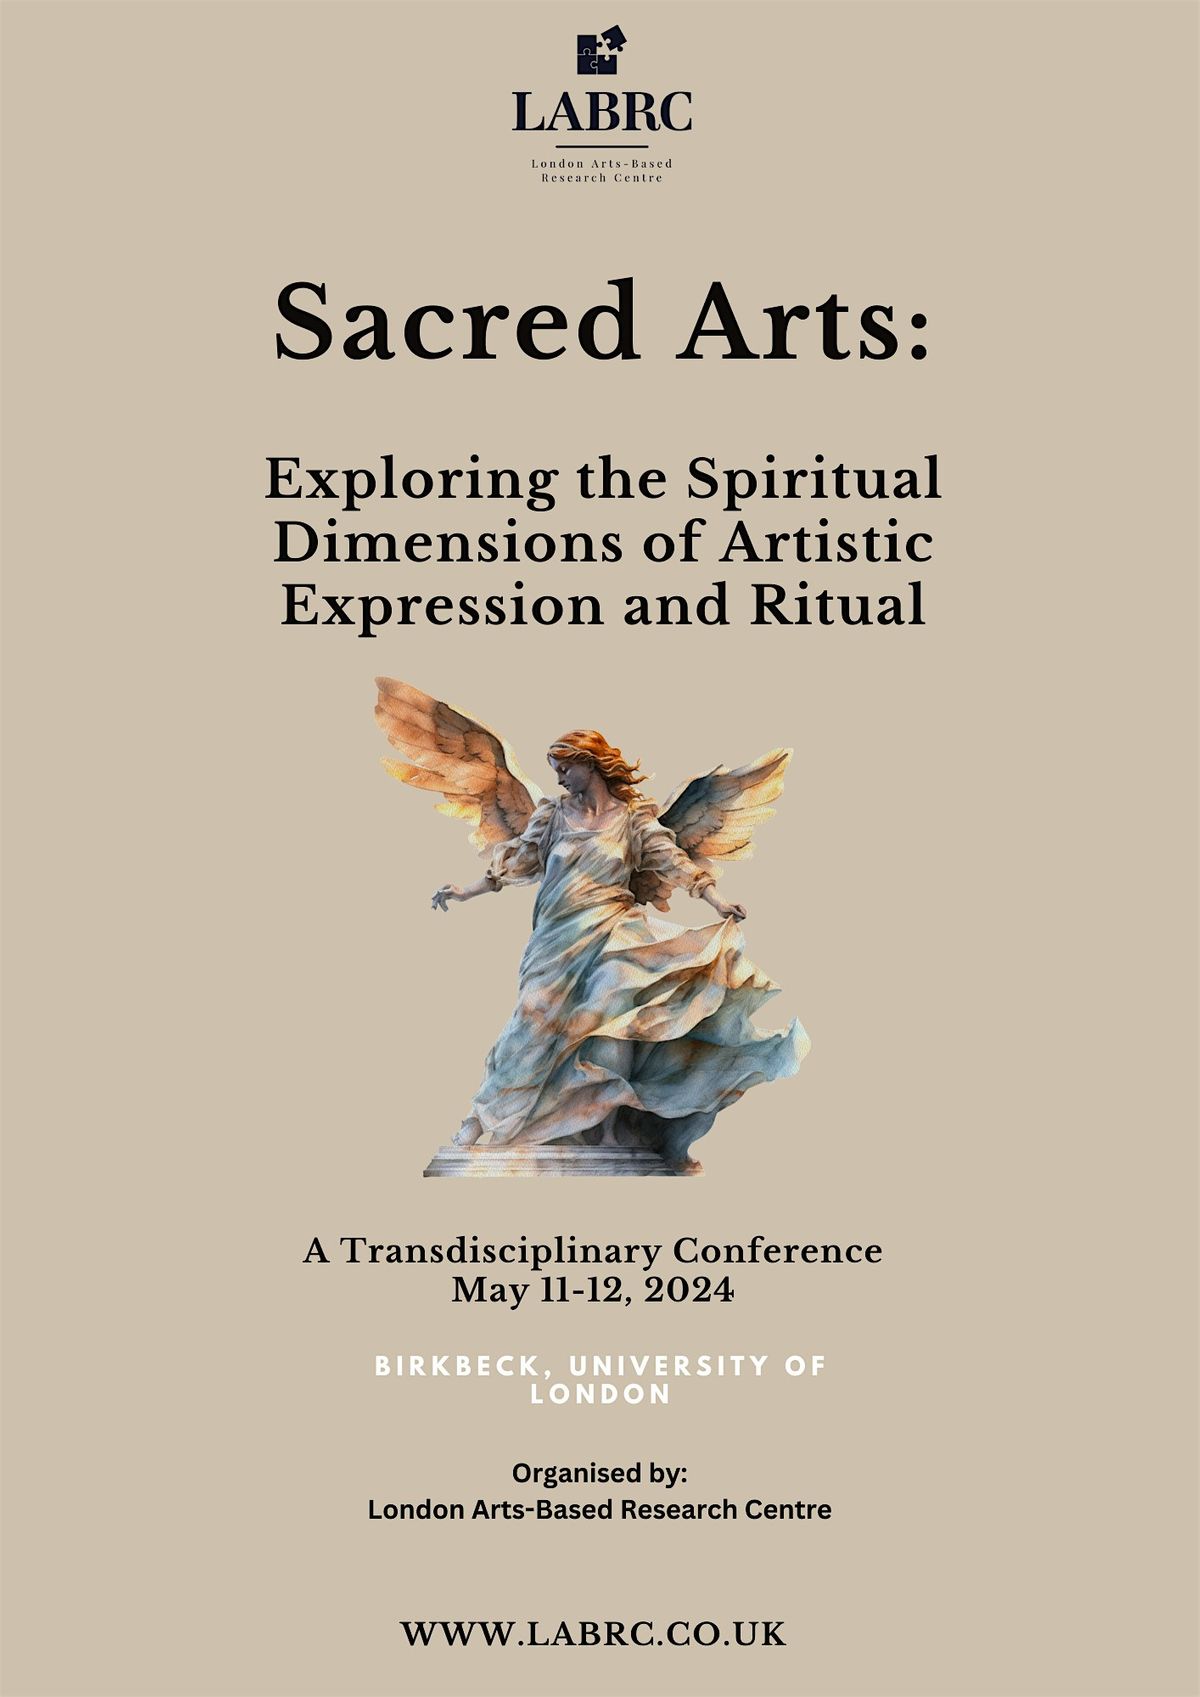 Sacred Arts: Exploring Spiritual Dimensions of Artistic Expression & Ritual